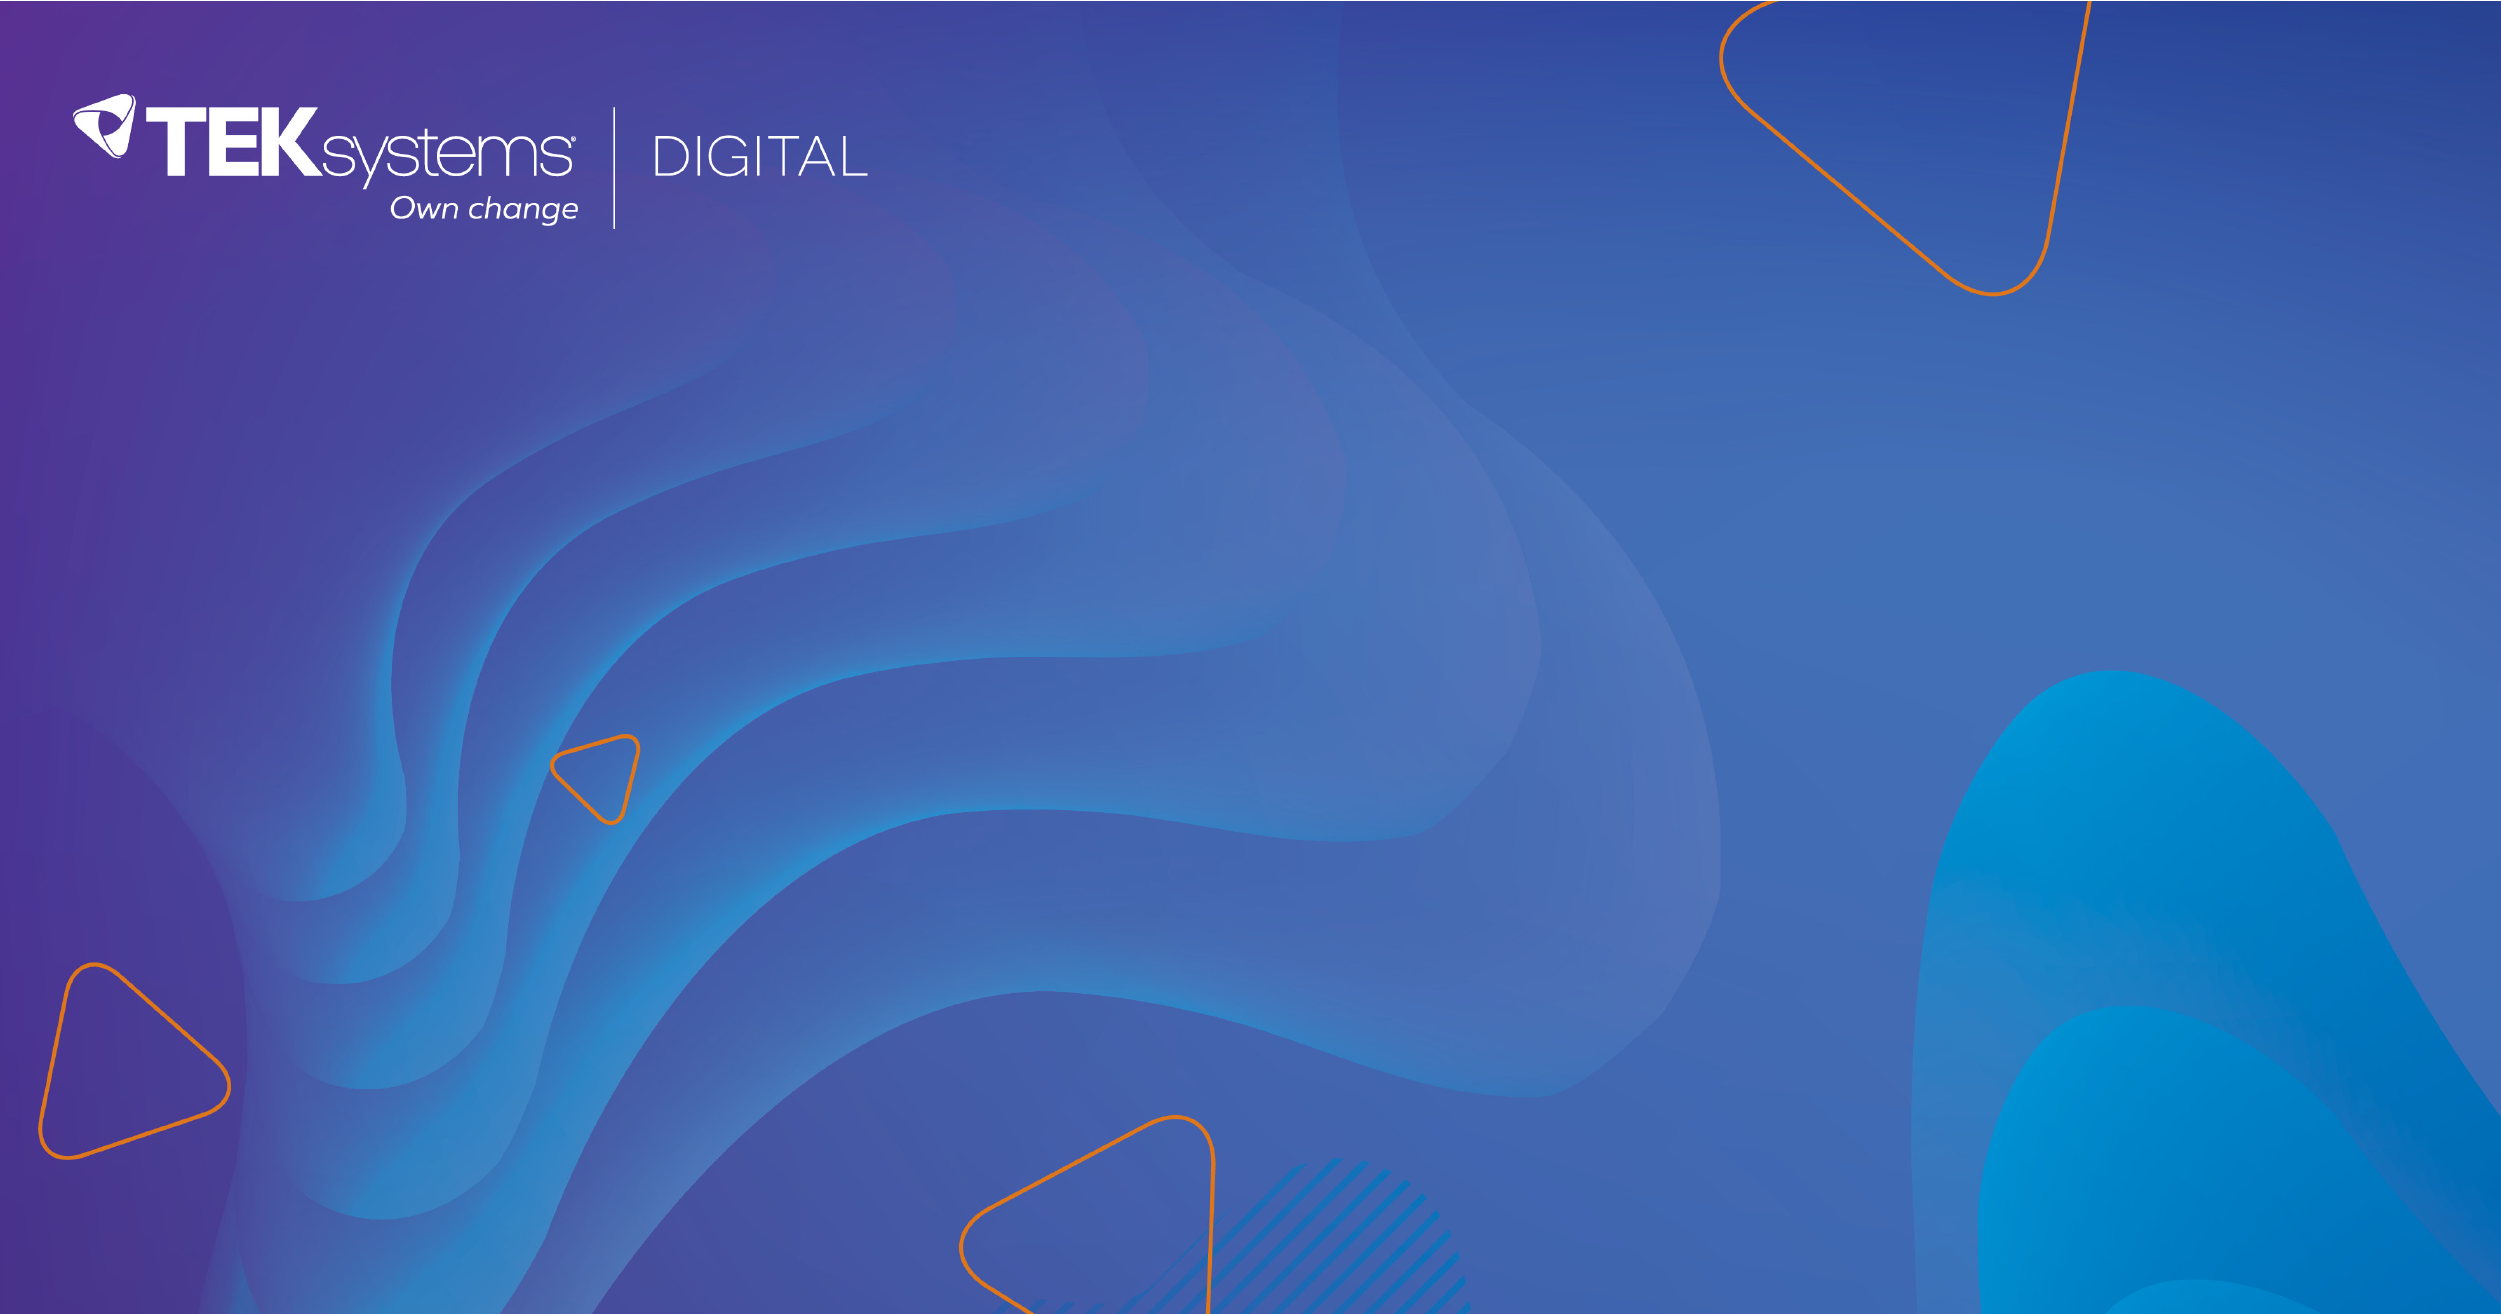 TEK_Digital: 3 key insights from this year's #digital #AdobeSummit https://t.co/BM6La24uAN